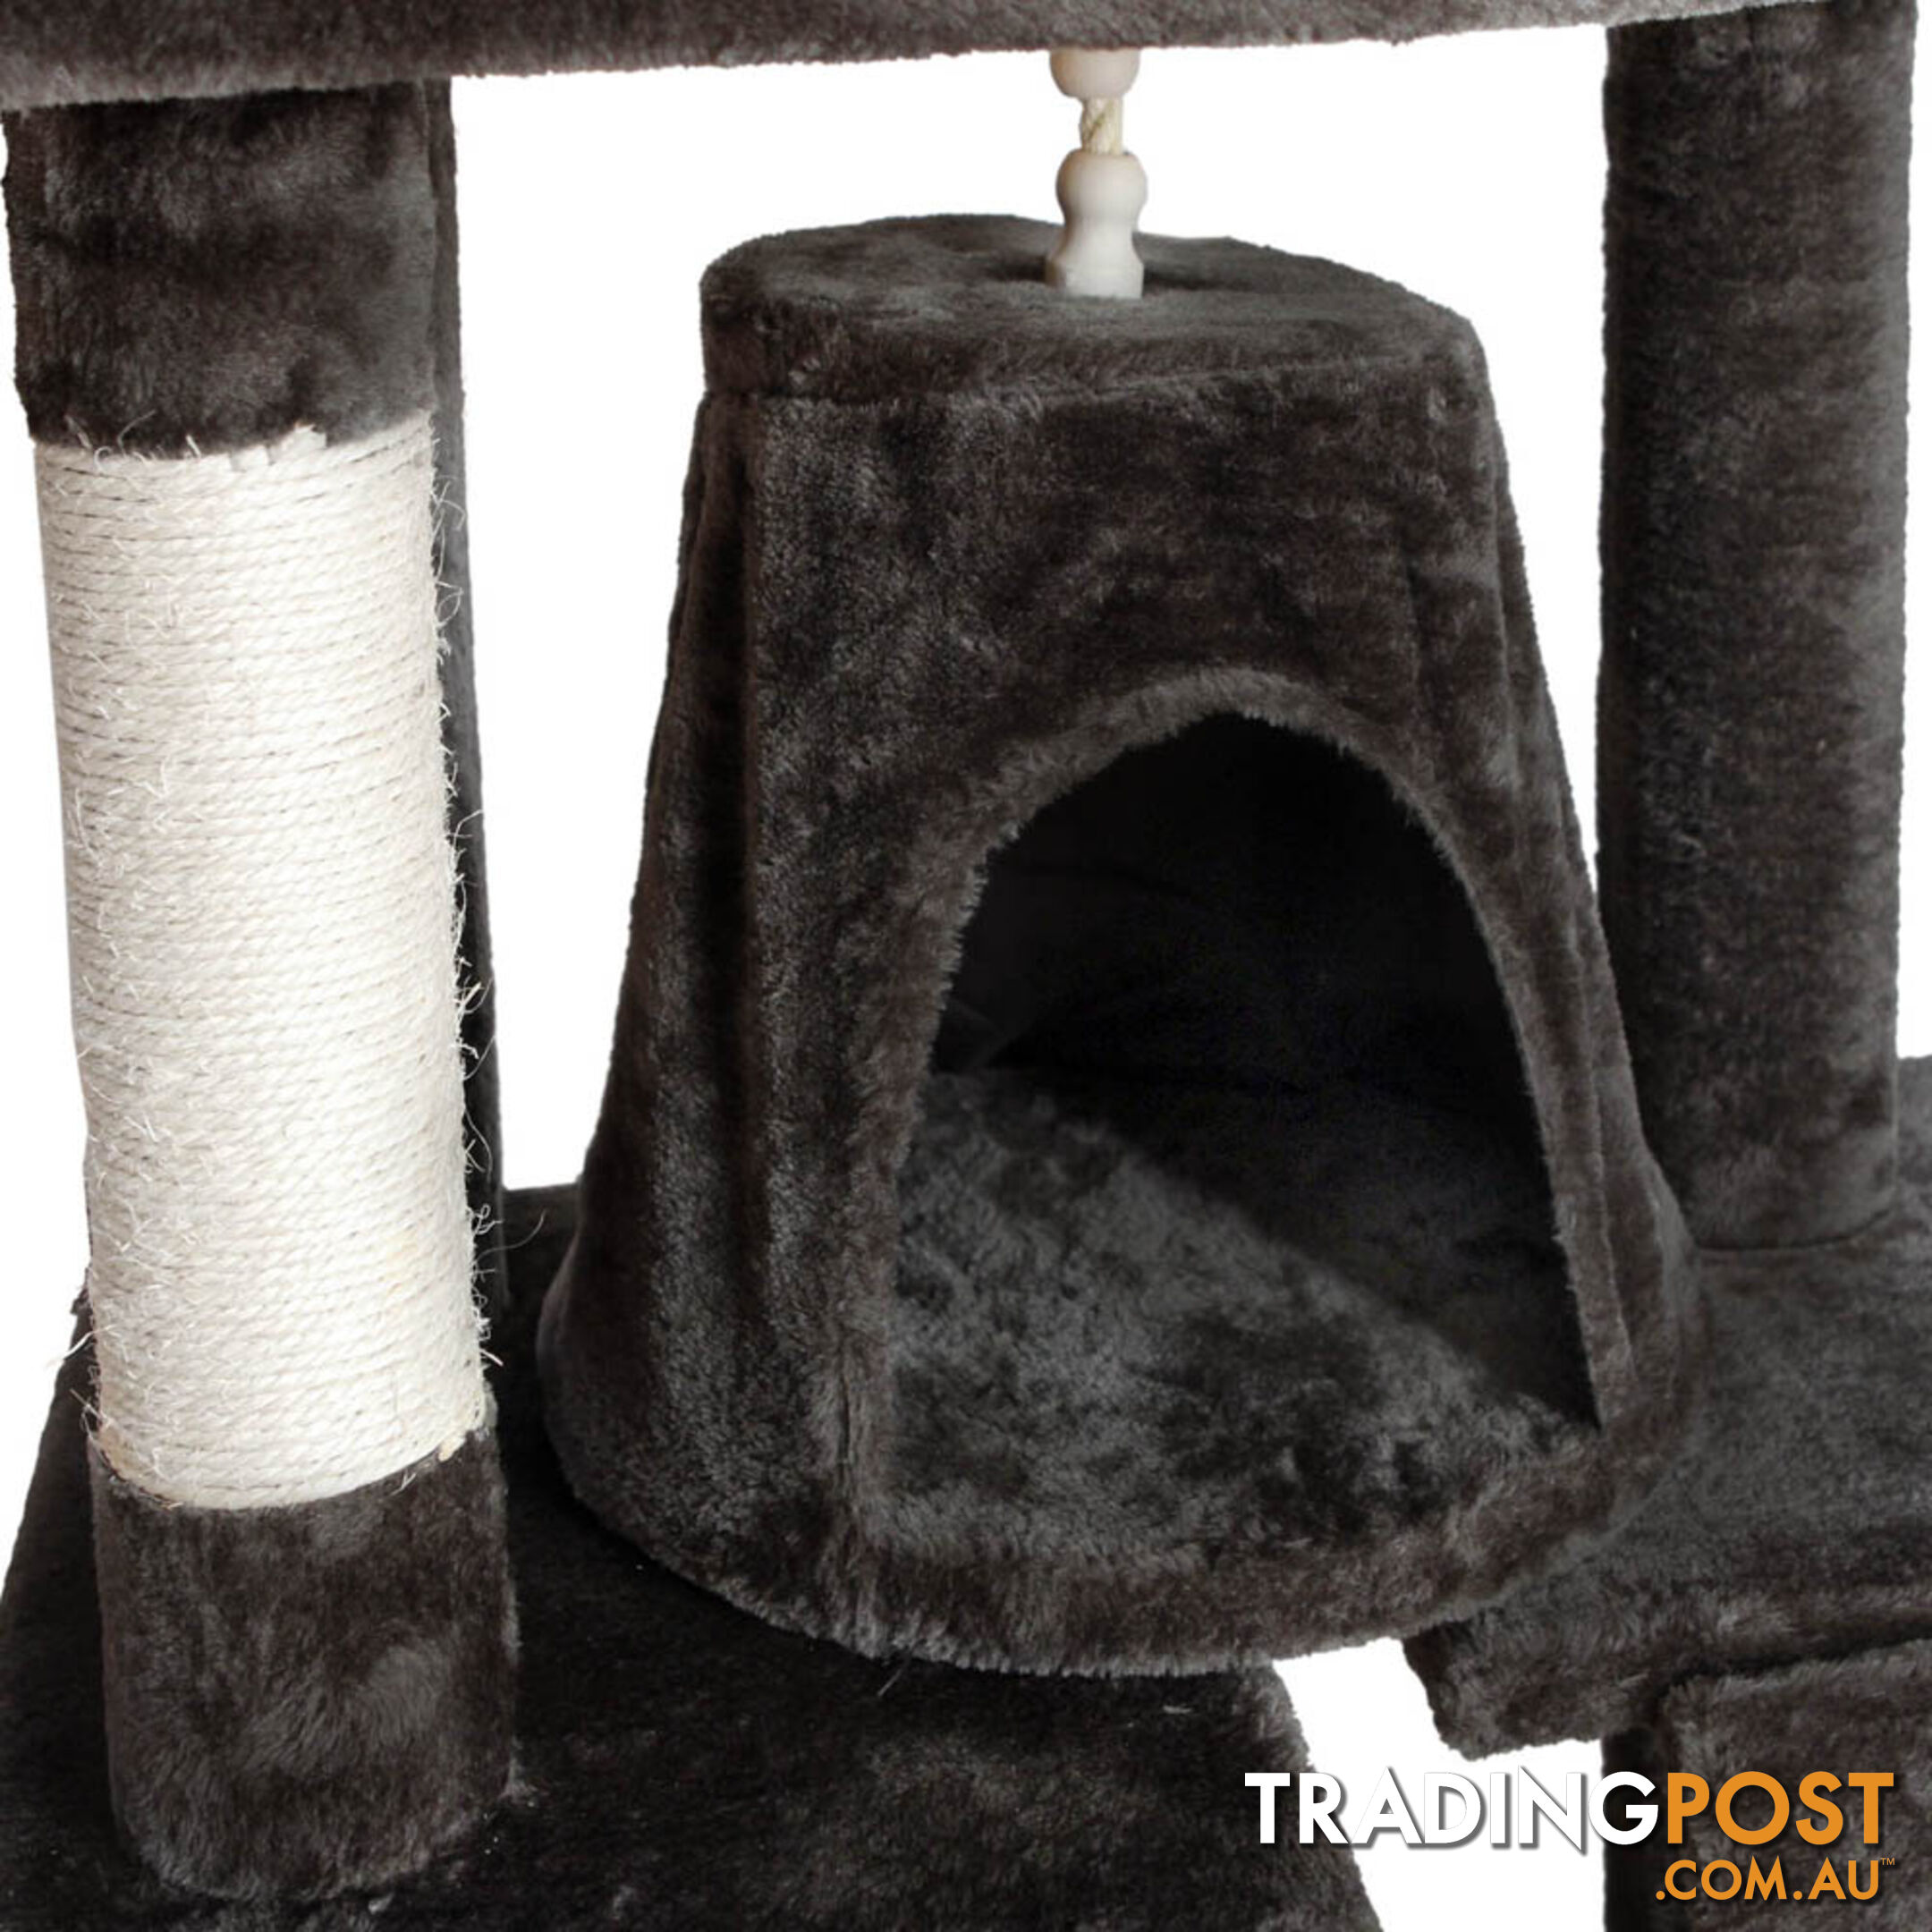 Cat Scratching Poles Post Furniture Tree 193cm Dark Grey